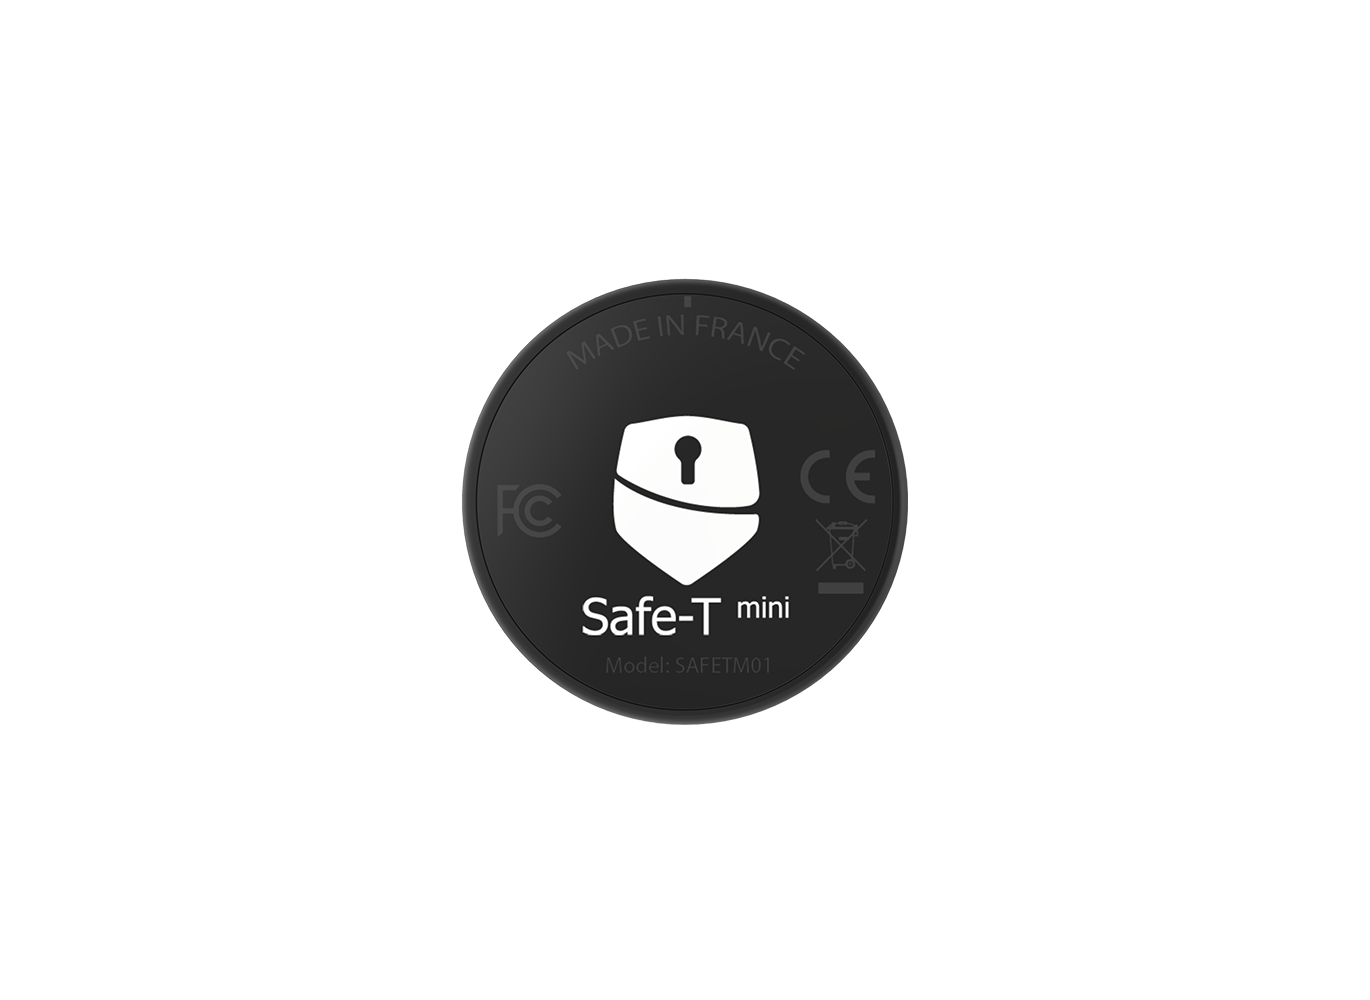 Archos Logo - ARCHOS Safe-T mini, Crypto - Overview